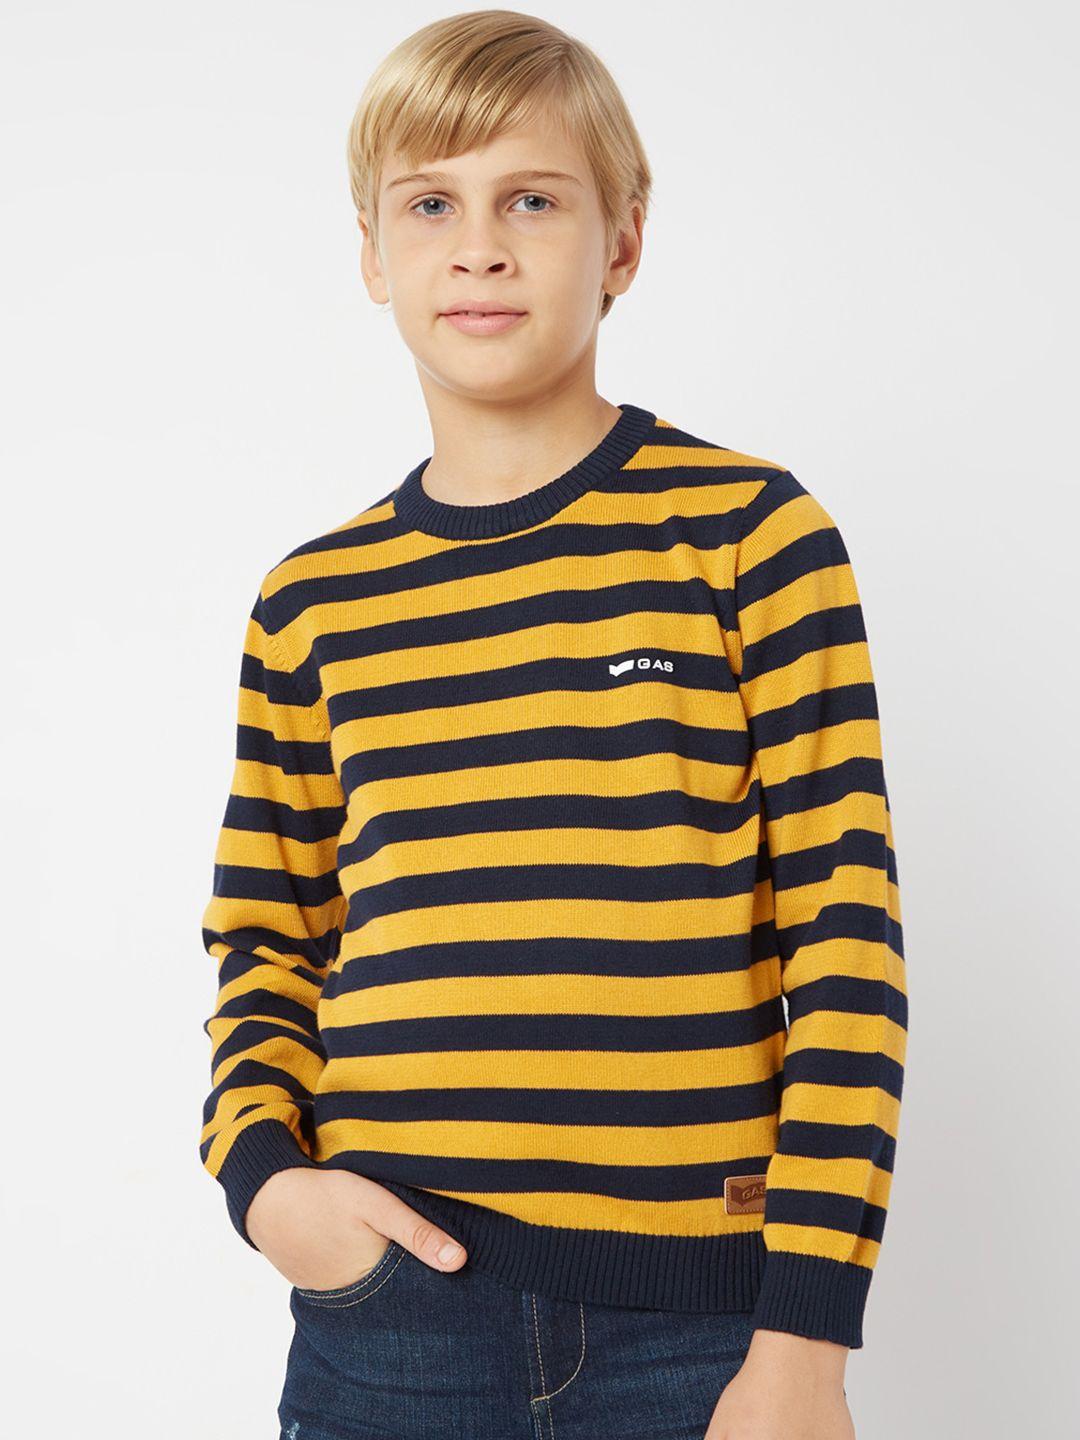 gas boys striped cotton pullover sweater